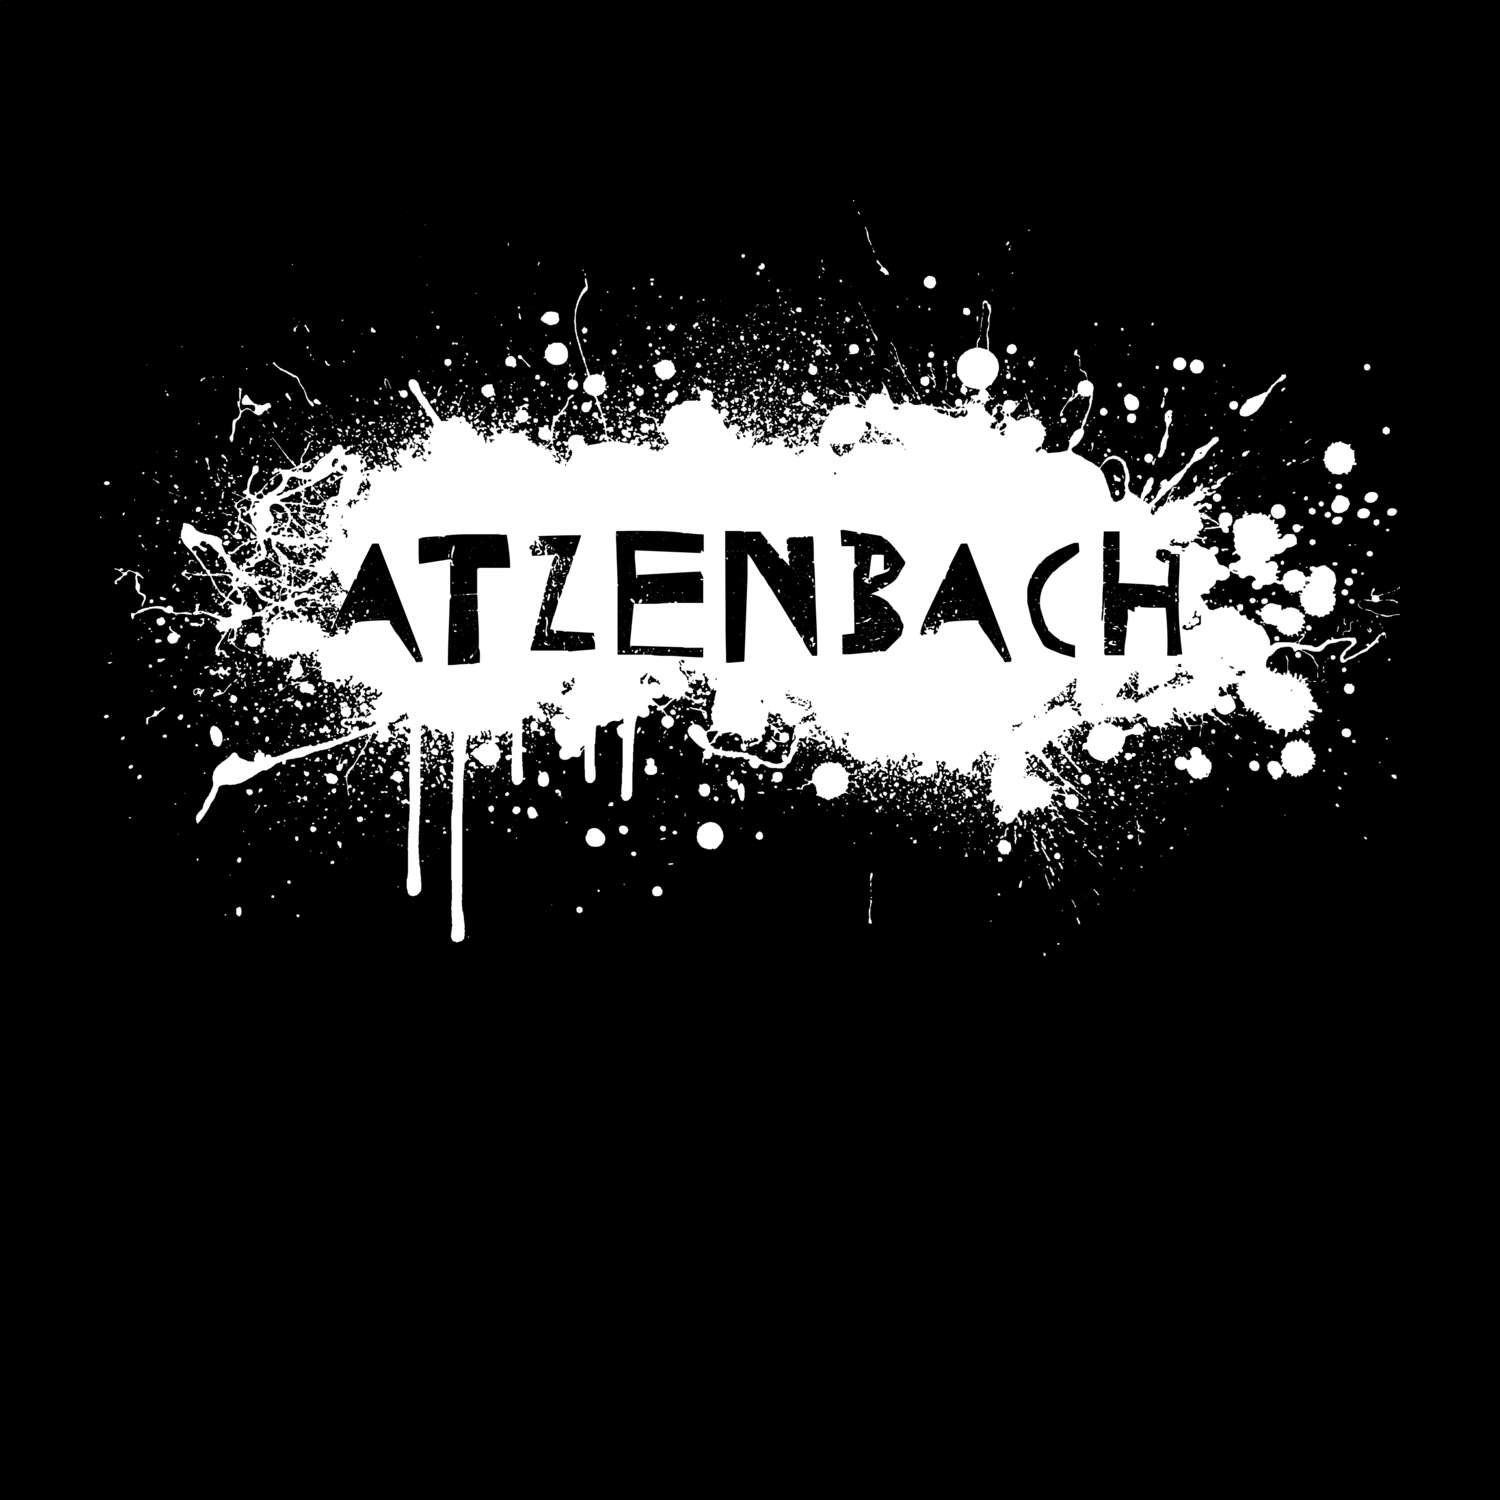 Atzenbach T-Shirt »Paint Splash Punk«